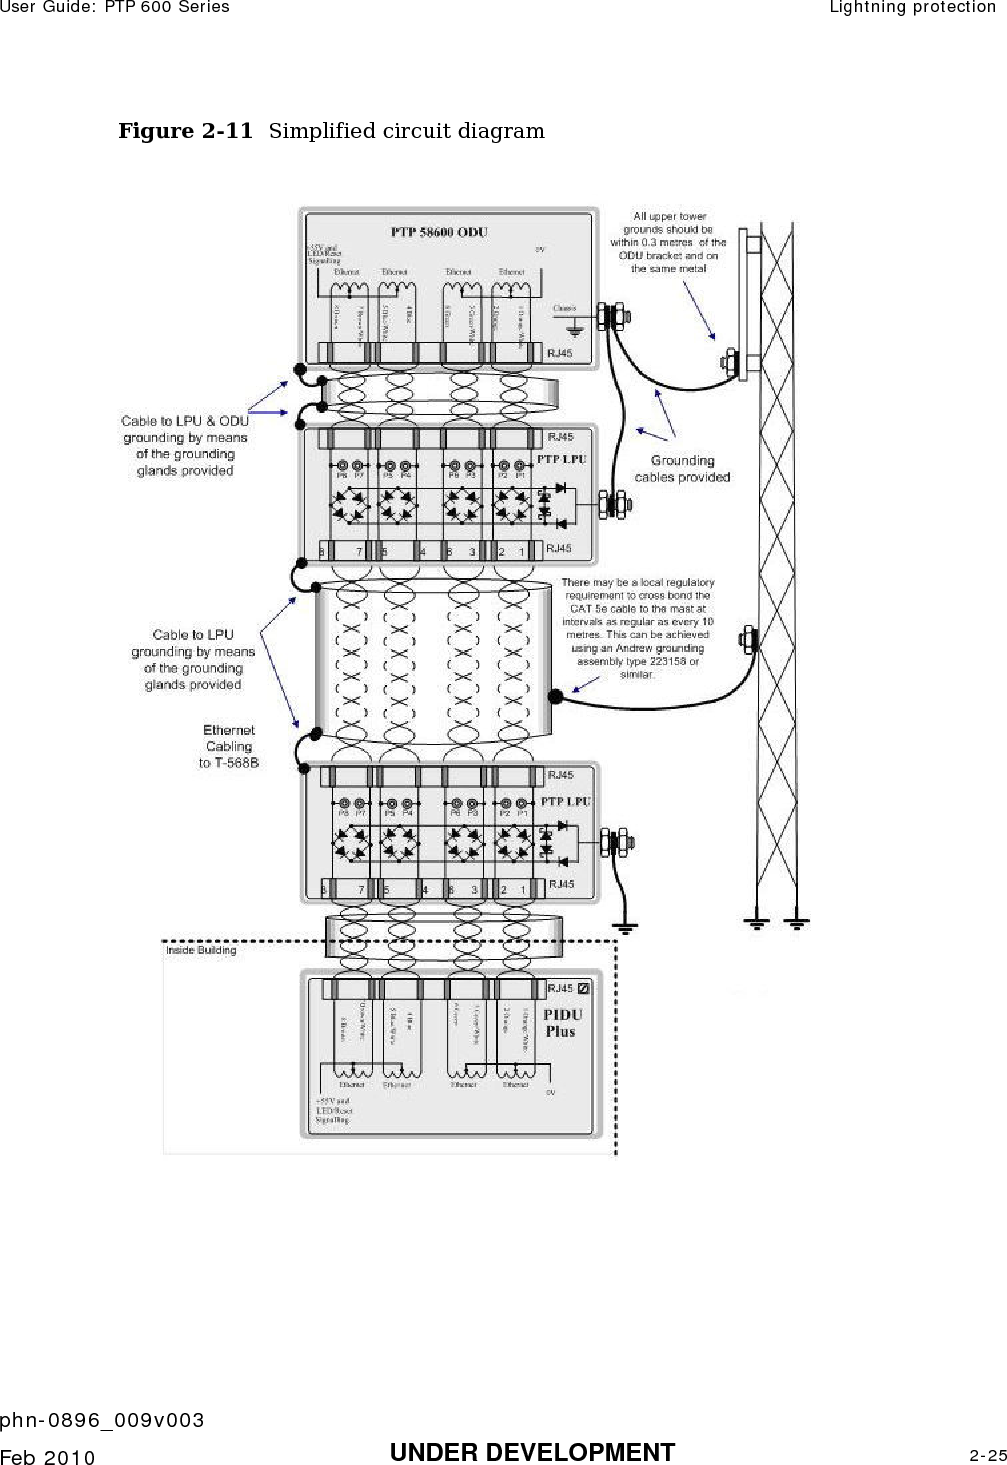 User Guide: PTP 600 Series  Lightning protection    phn-0896_009v003   Feb 2010  UNDER DEVELOPMENT  2-25  Figure 2-11  Simplified circuit diagram   